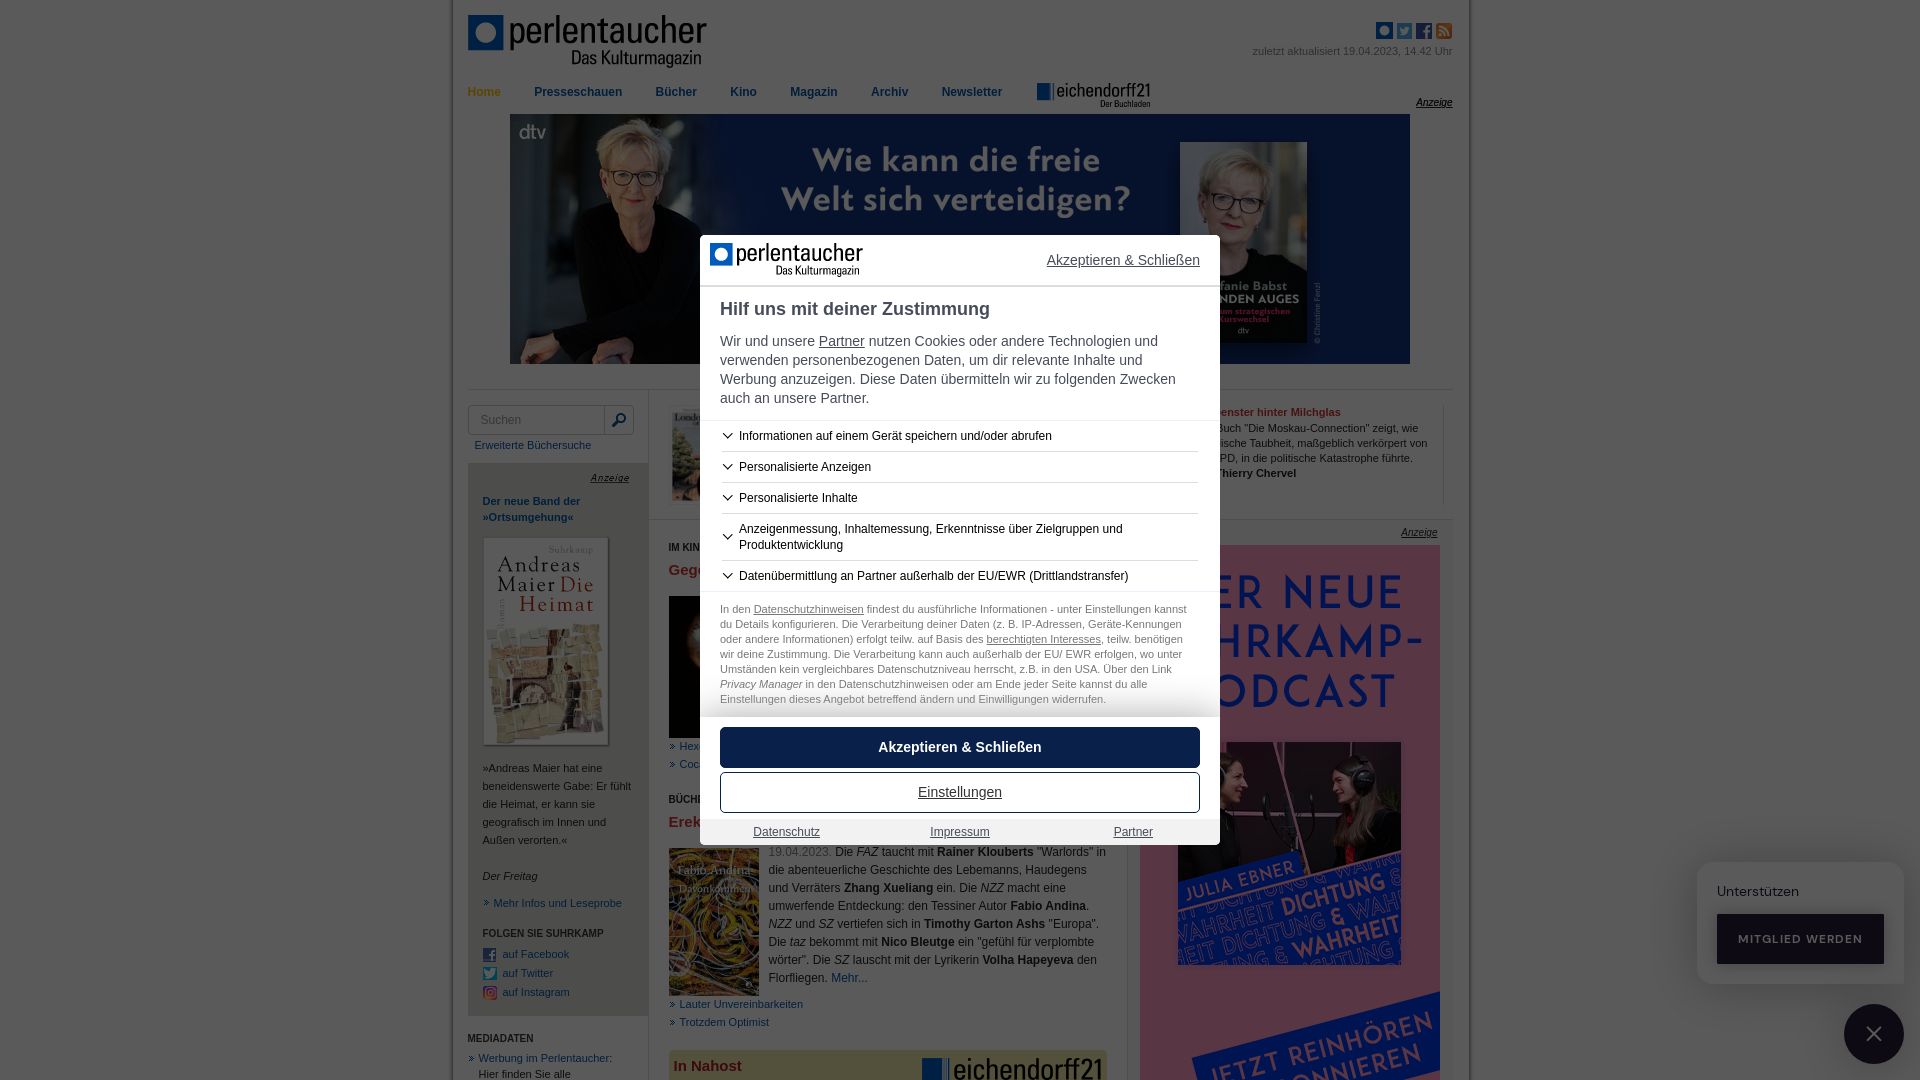 вебсайт perlentaucher.de Є   ONLINE